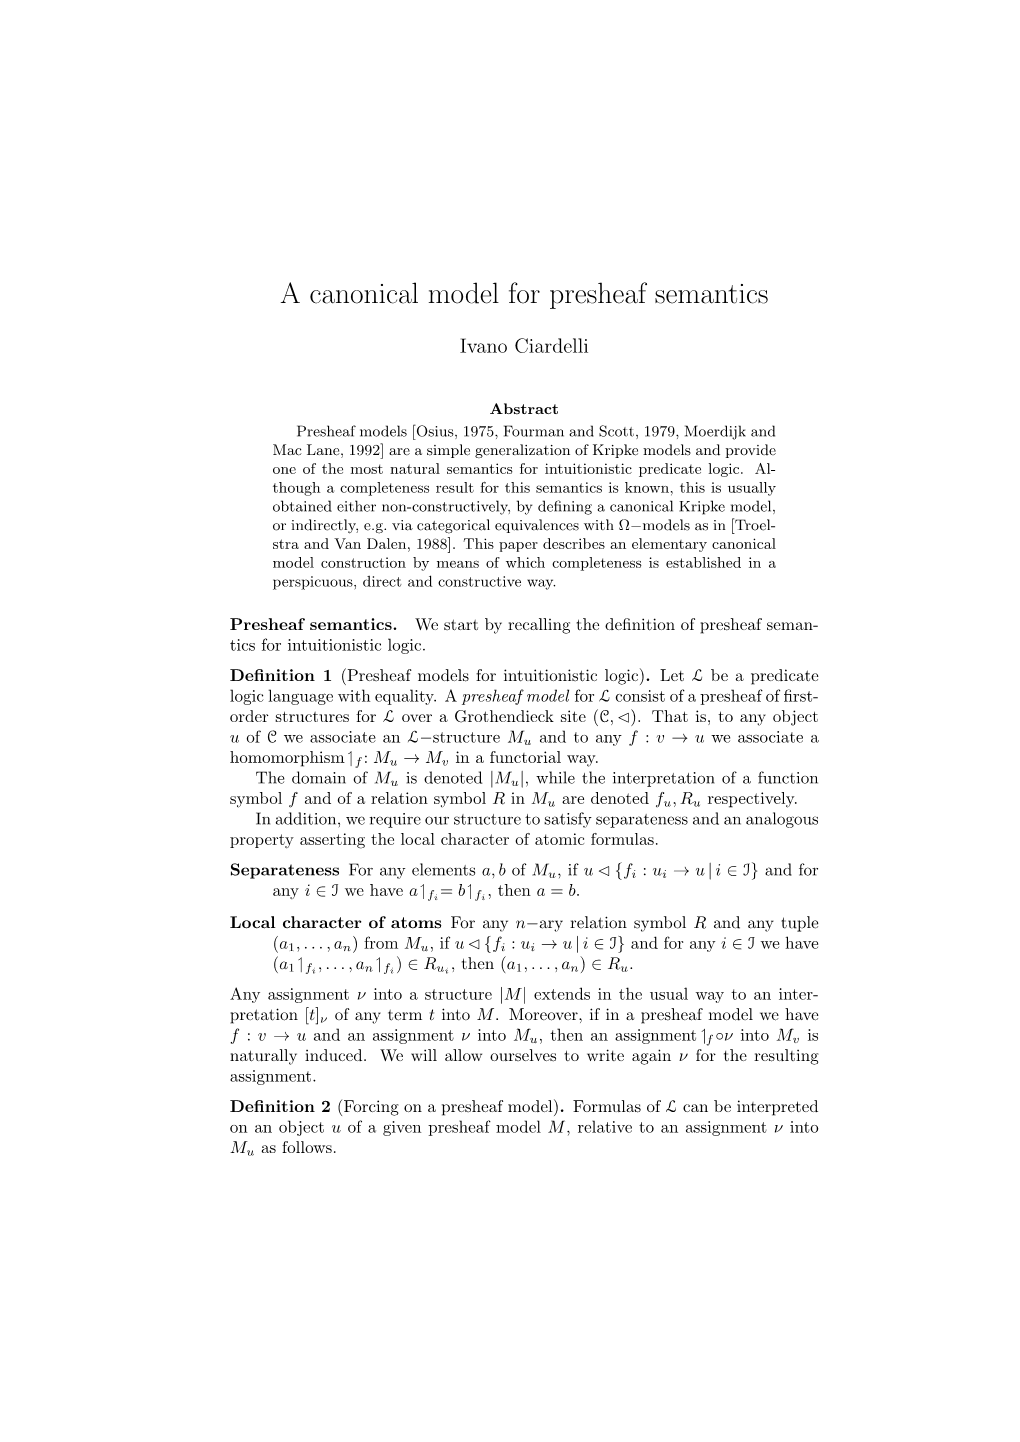 A Canonical Model for Presheaf Semantics